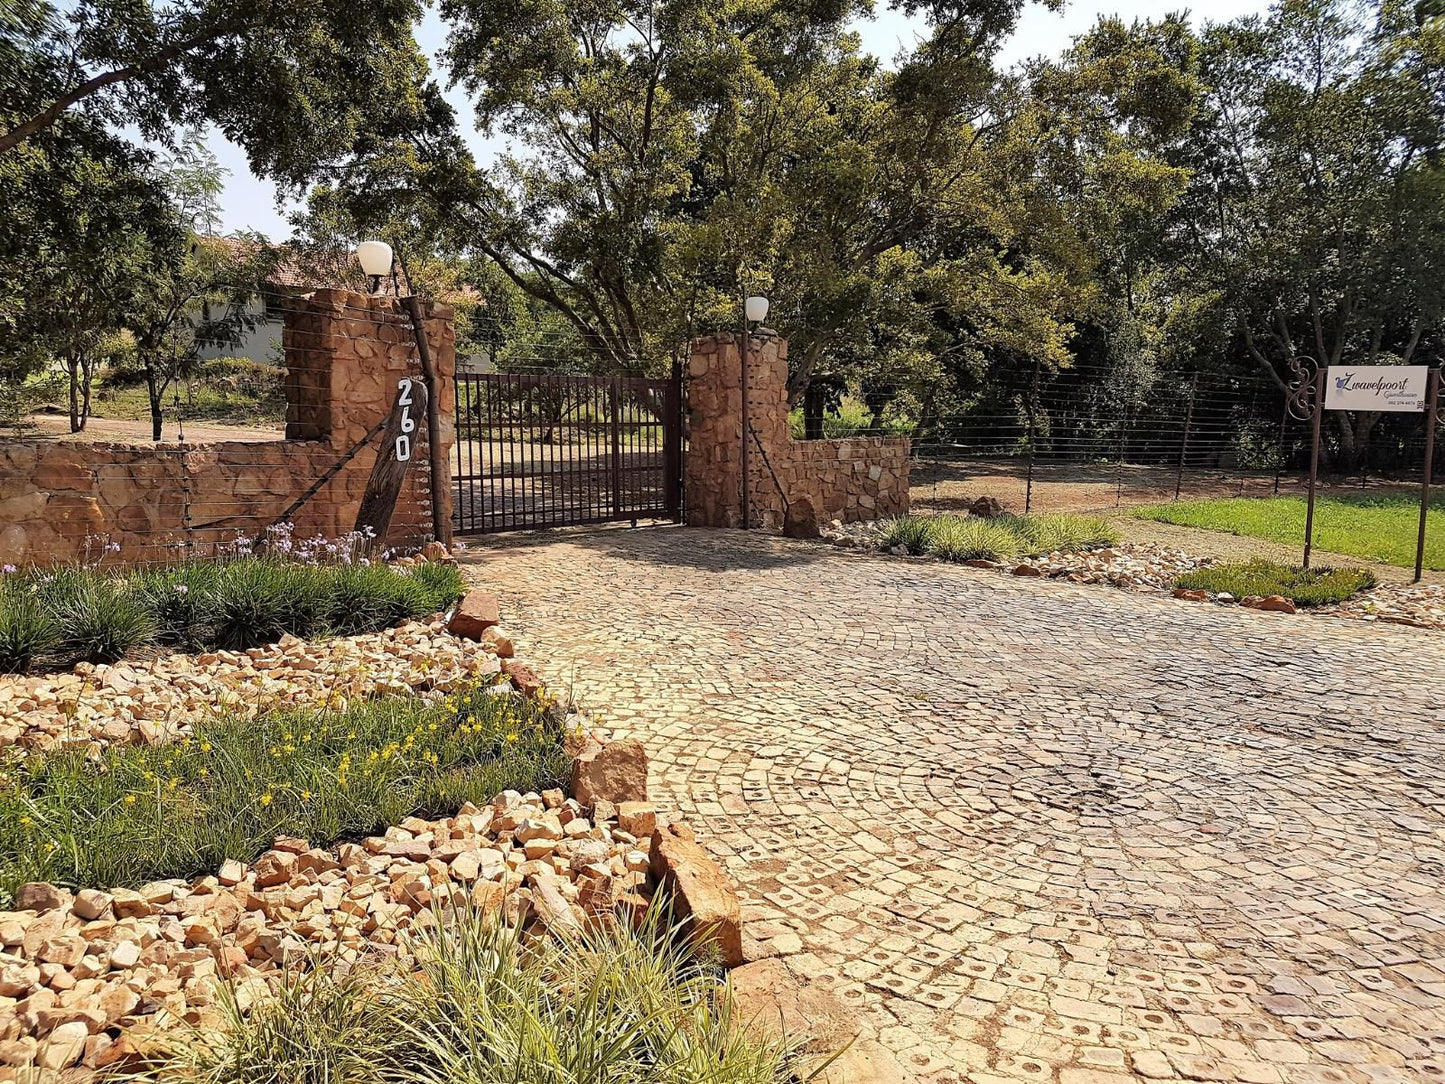 Zwavelpoort Guesthouse Mooikloof Pretoria Tshwane Gauteng South Africa Plant, Nature, Garden